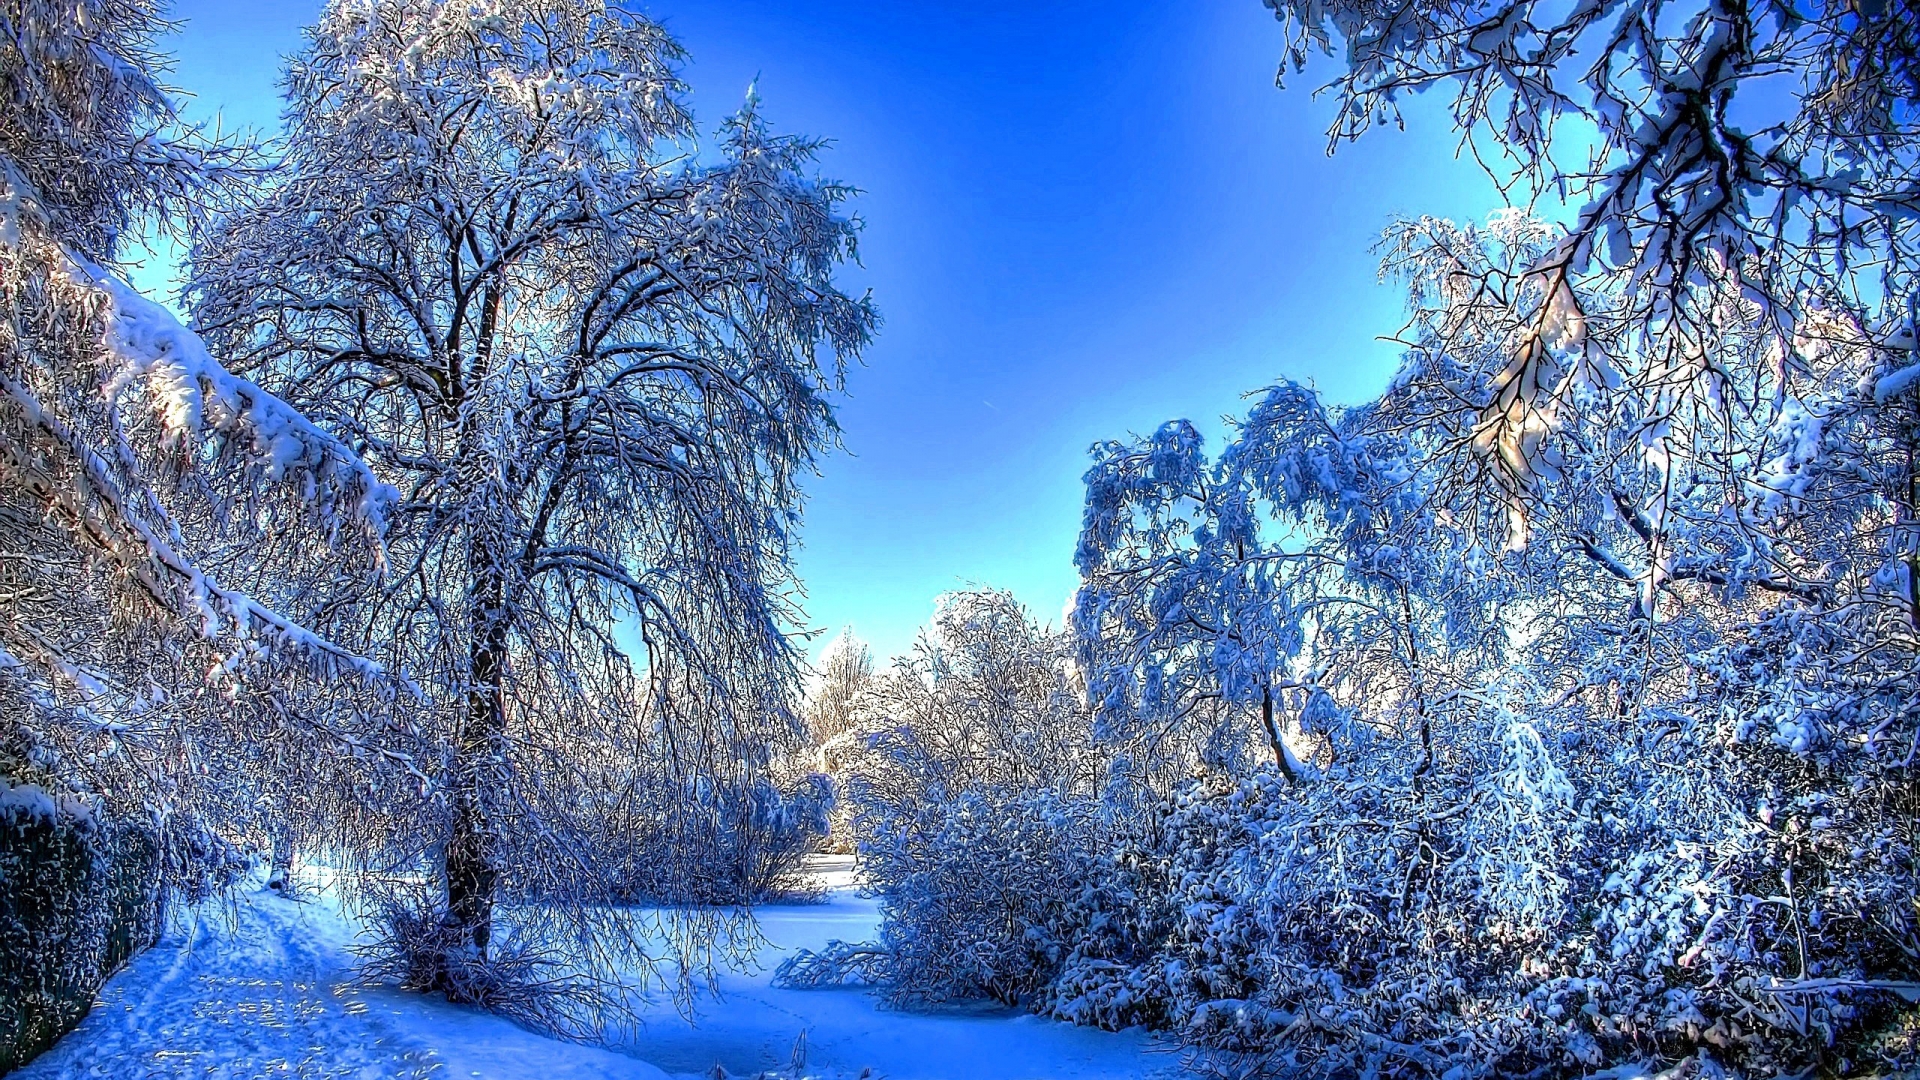 Winter Snow Landscape for 1920 x 1080 HDTV 1080p resolution